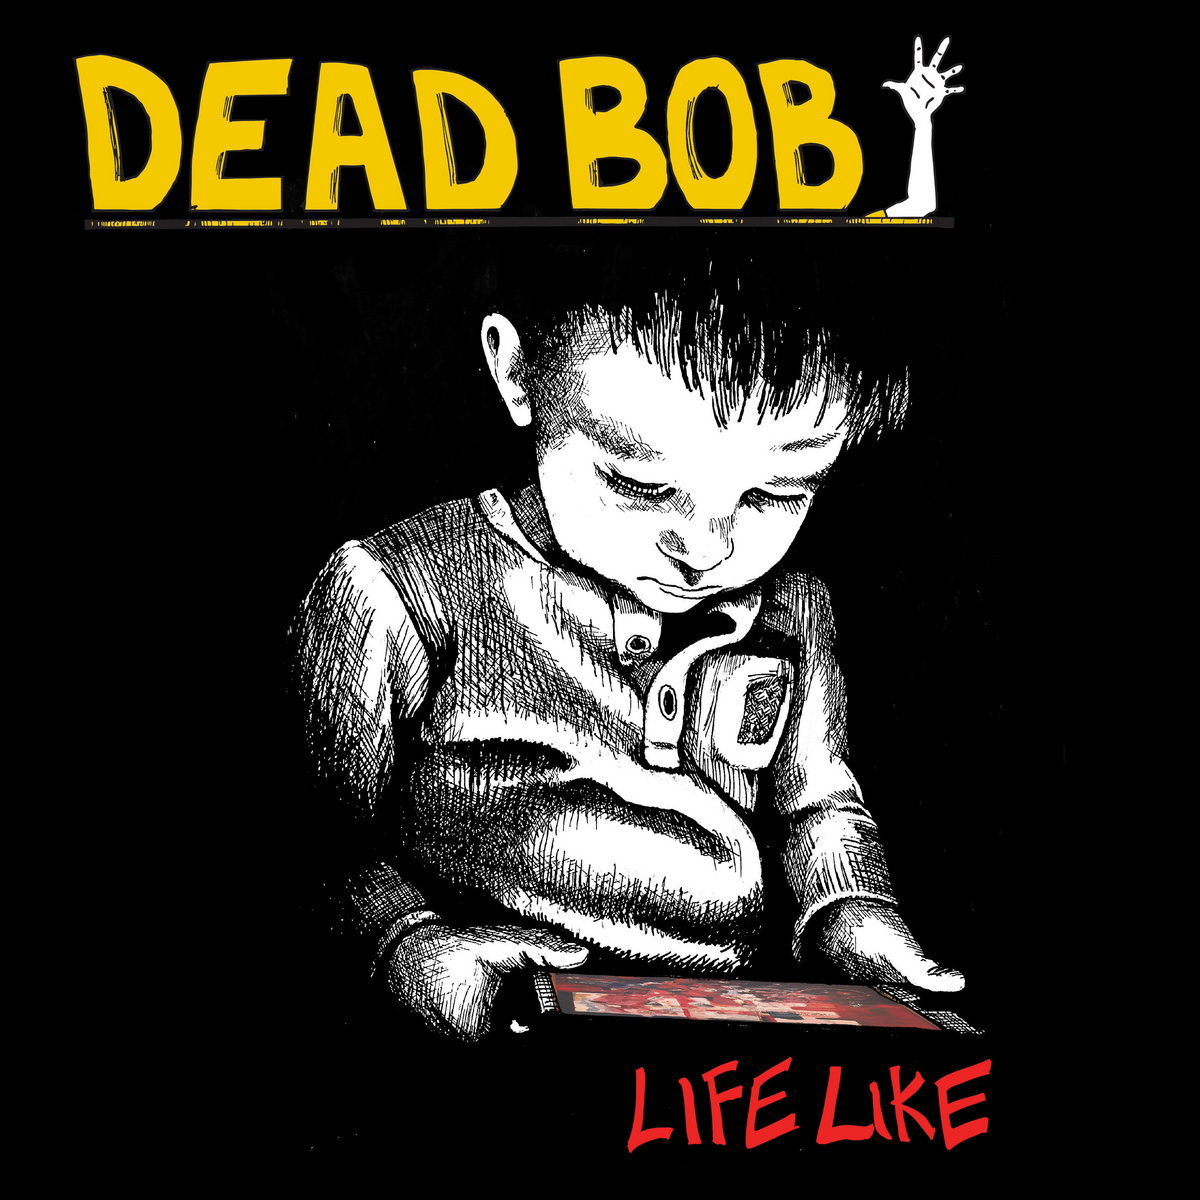 Dead Bob ‘Life Like’ album artwork